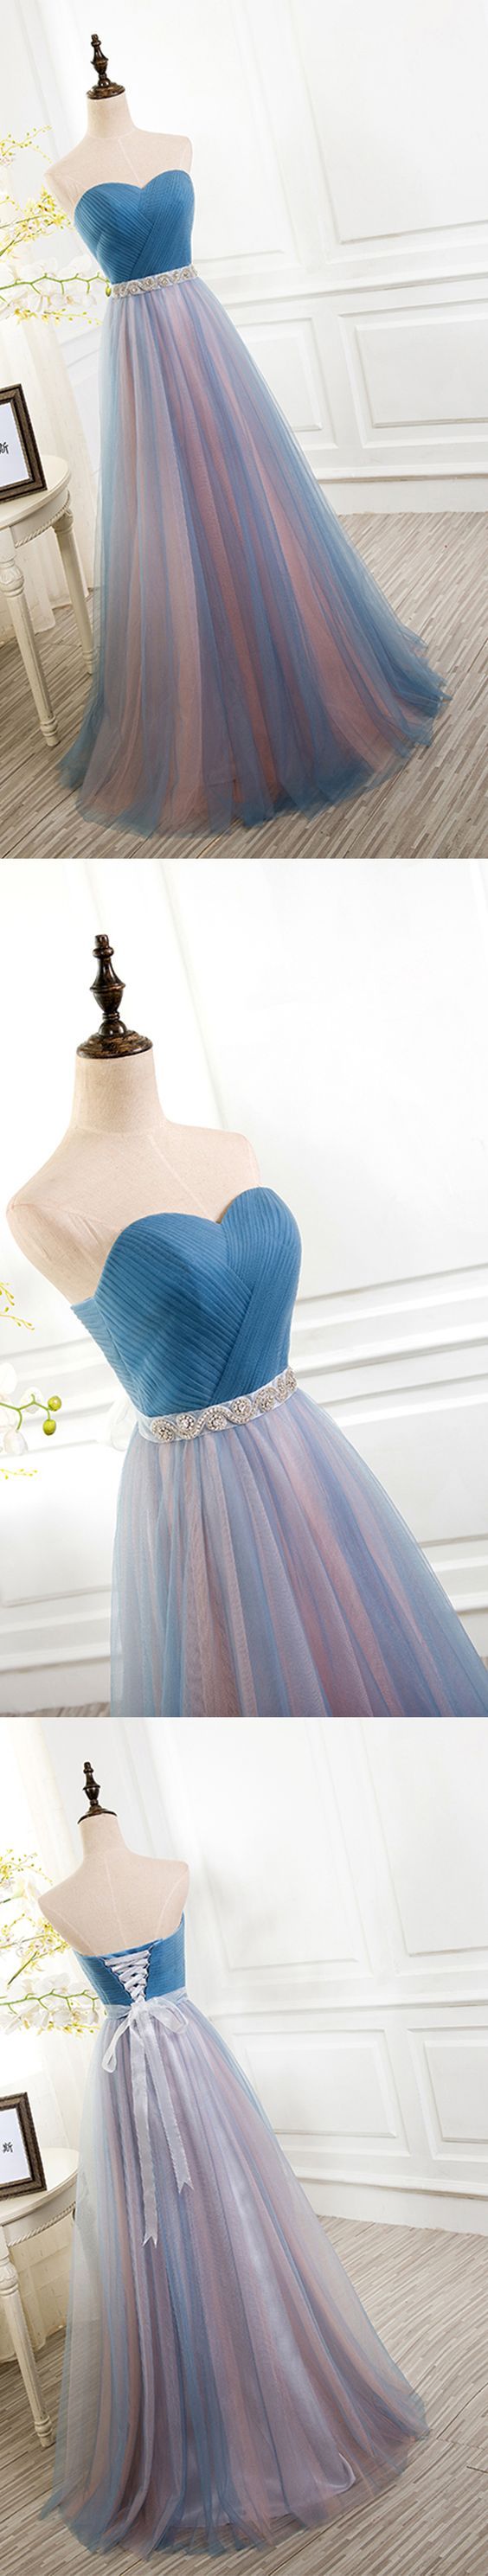 2017 Custom Made Chiffon Prom Dress,sweetheart Party Dress,sleeveless Prom Dress,high Quality